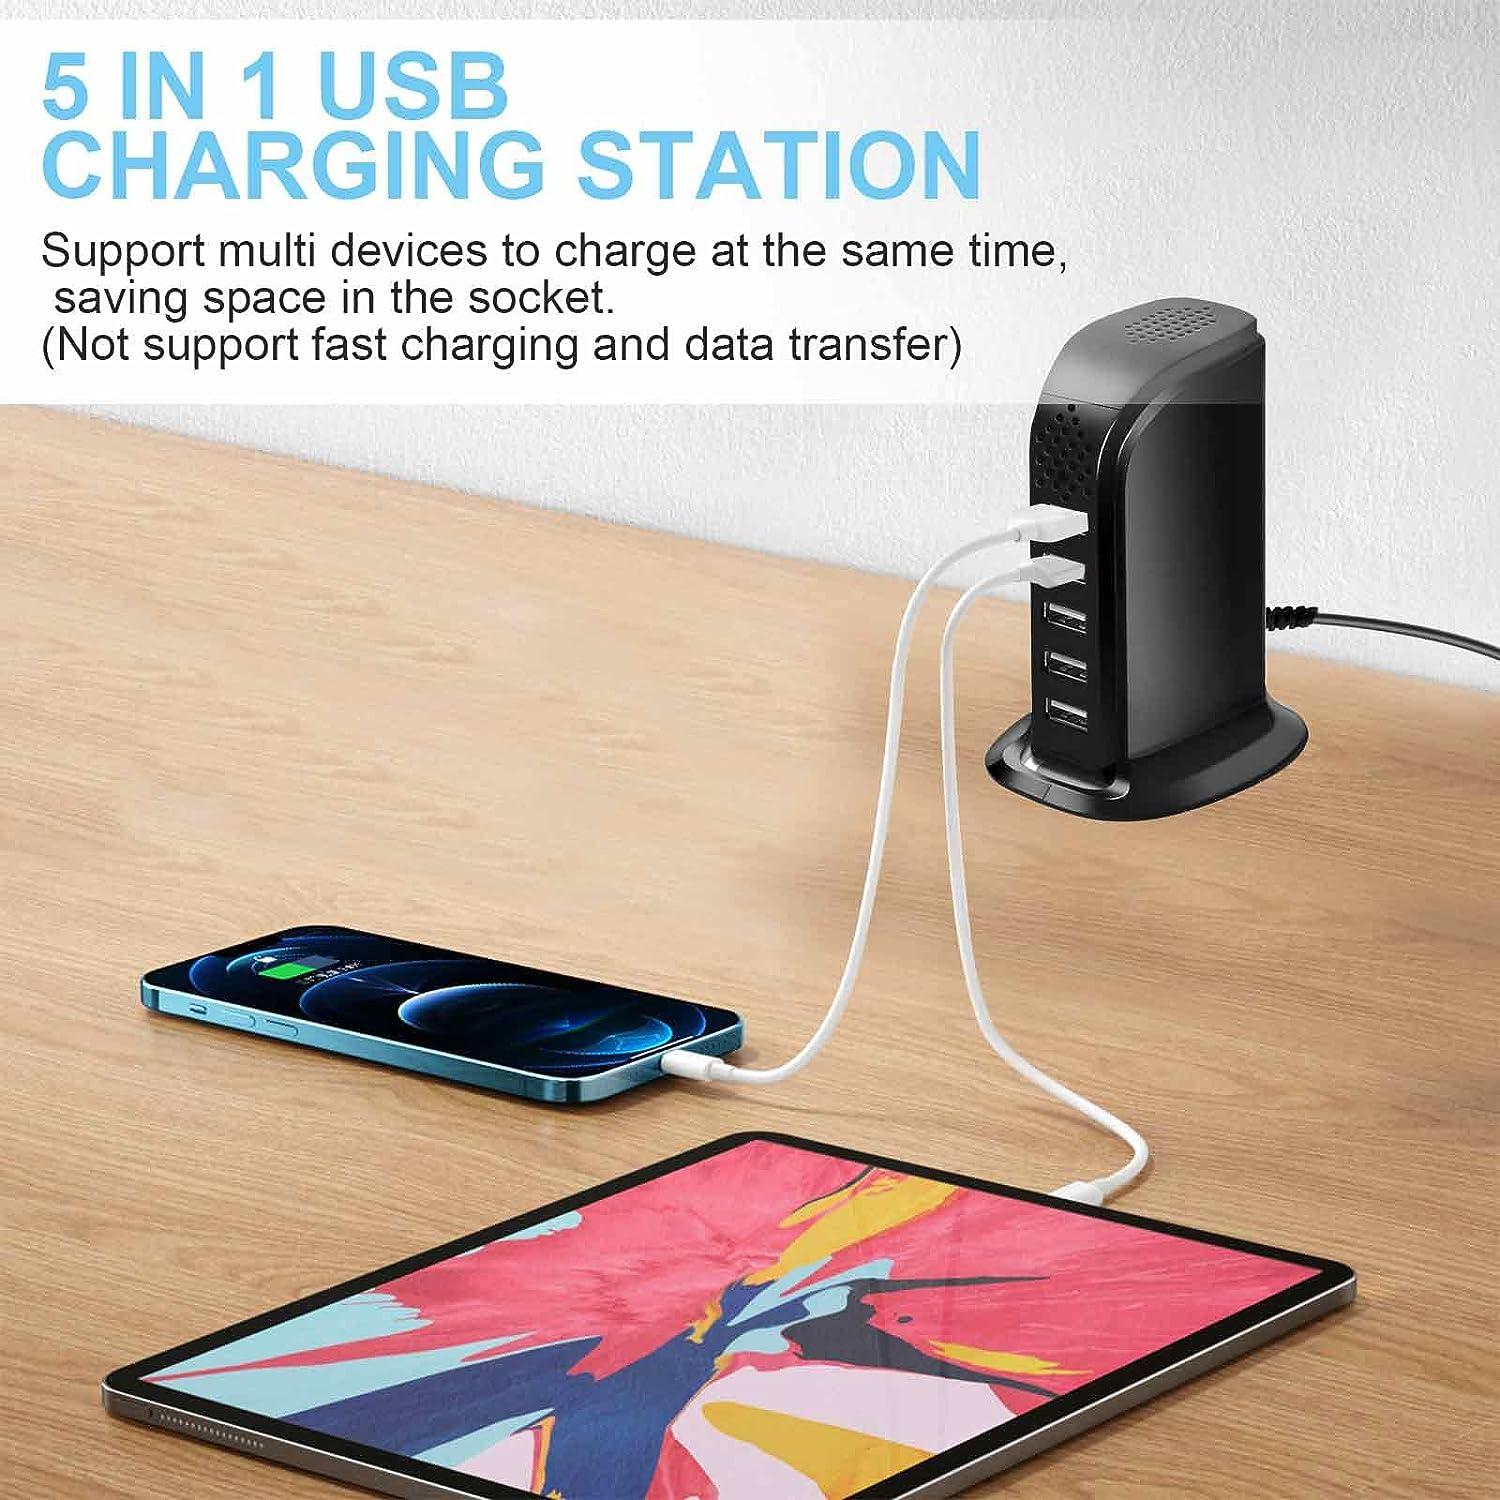 USB 5 port charging station